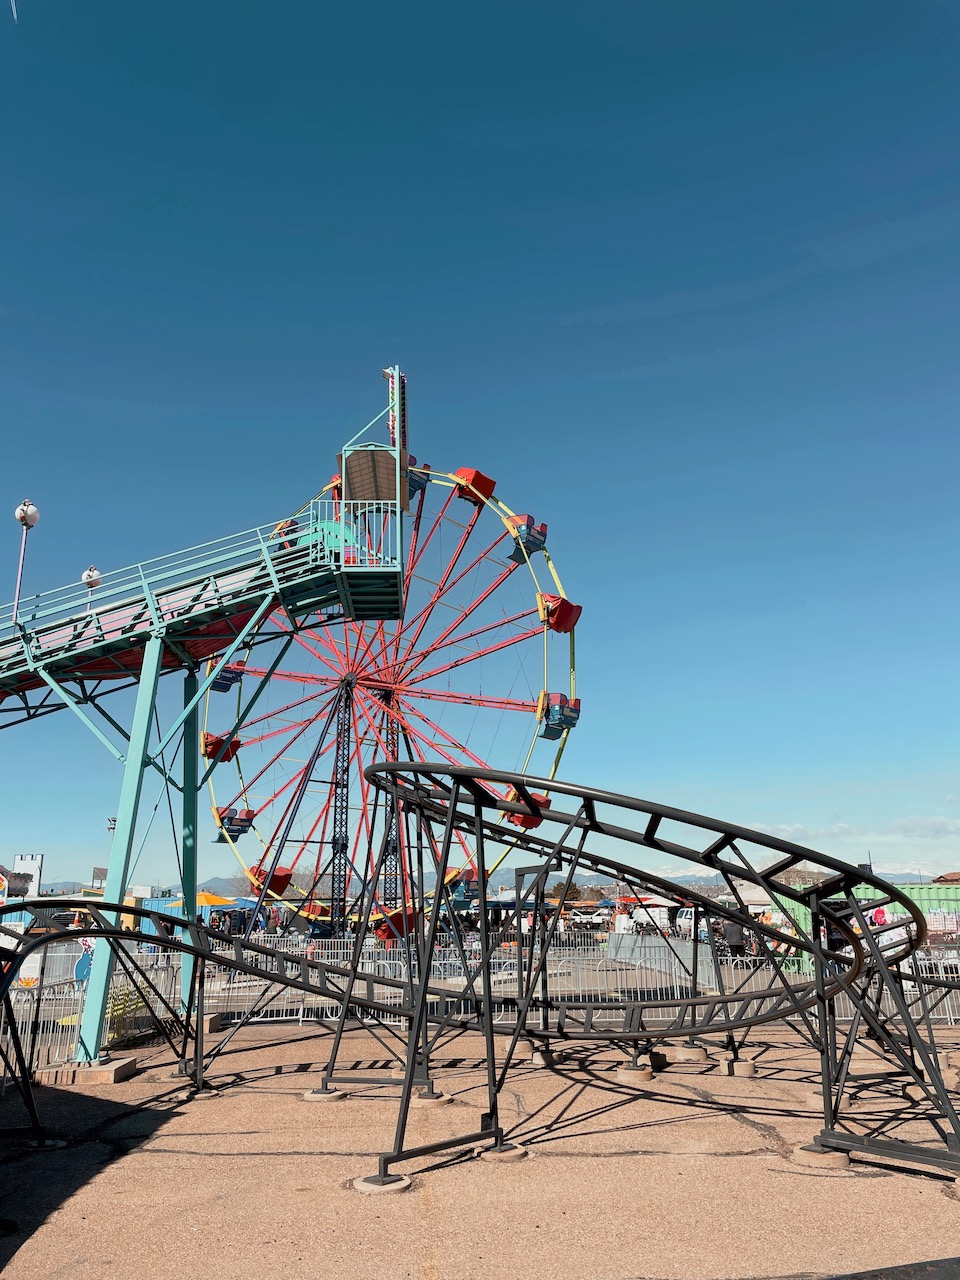 Mile High Flea Market, rides, Ferris Wheel